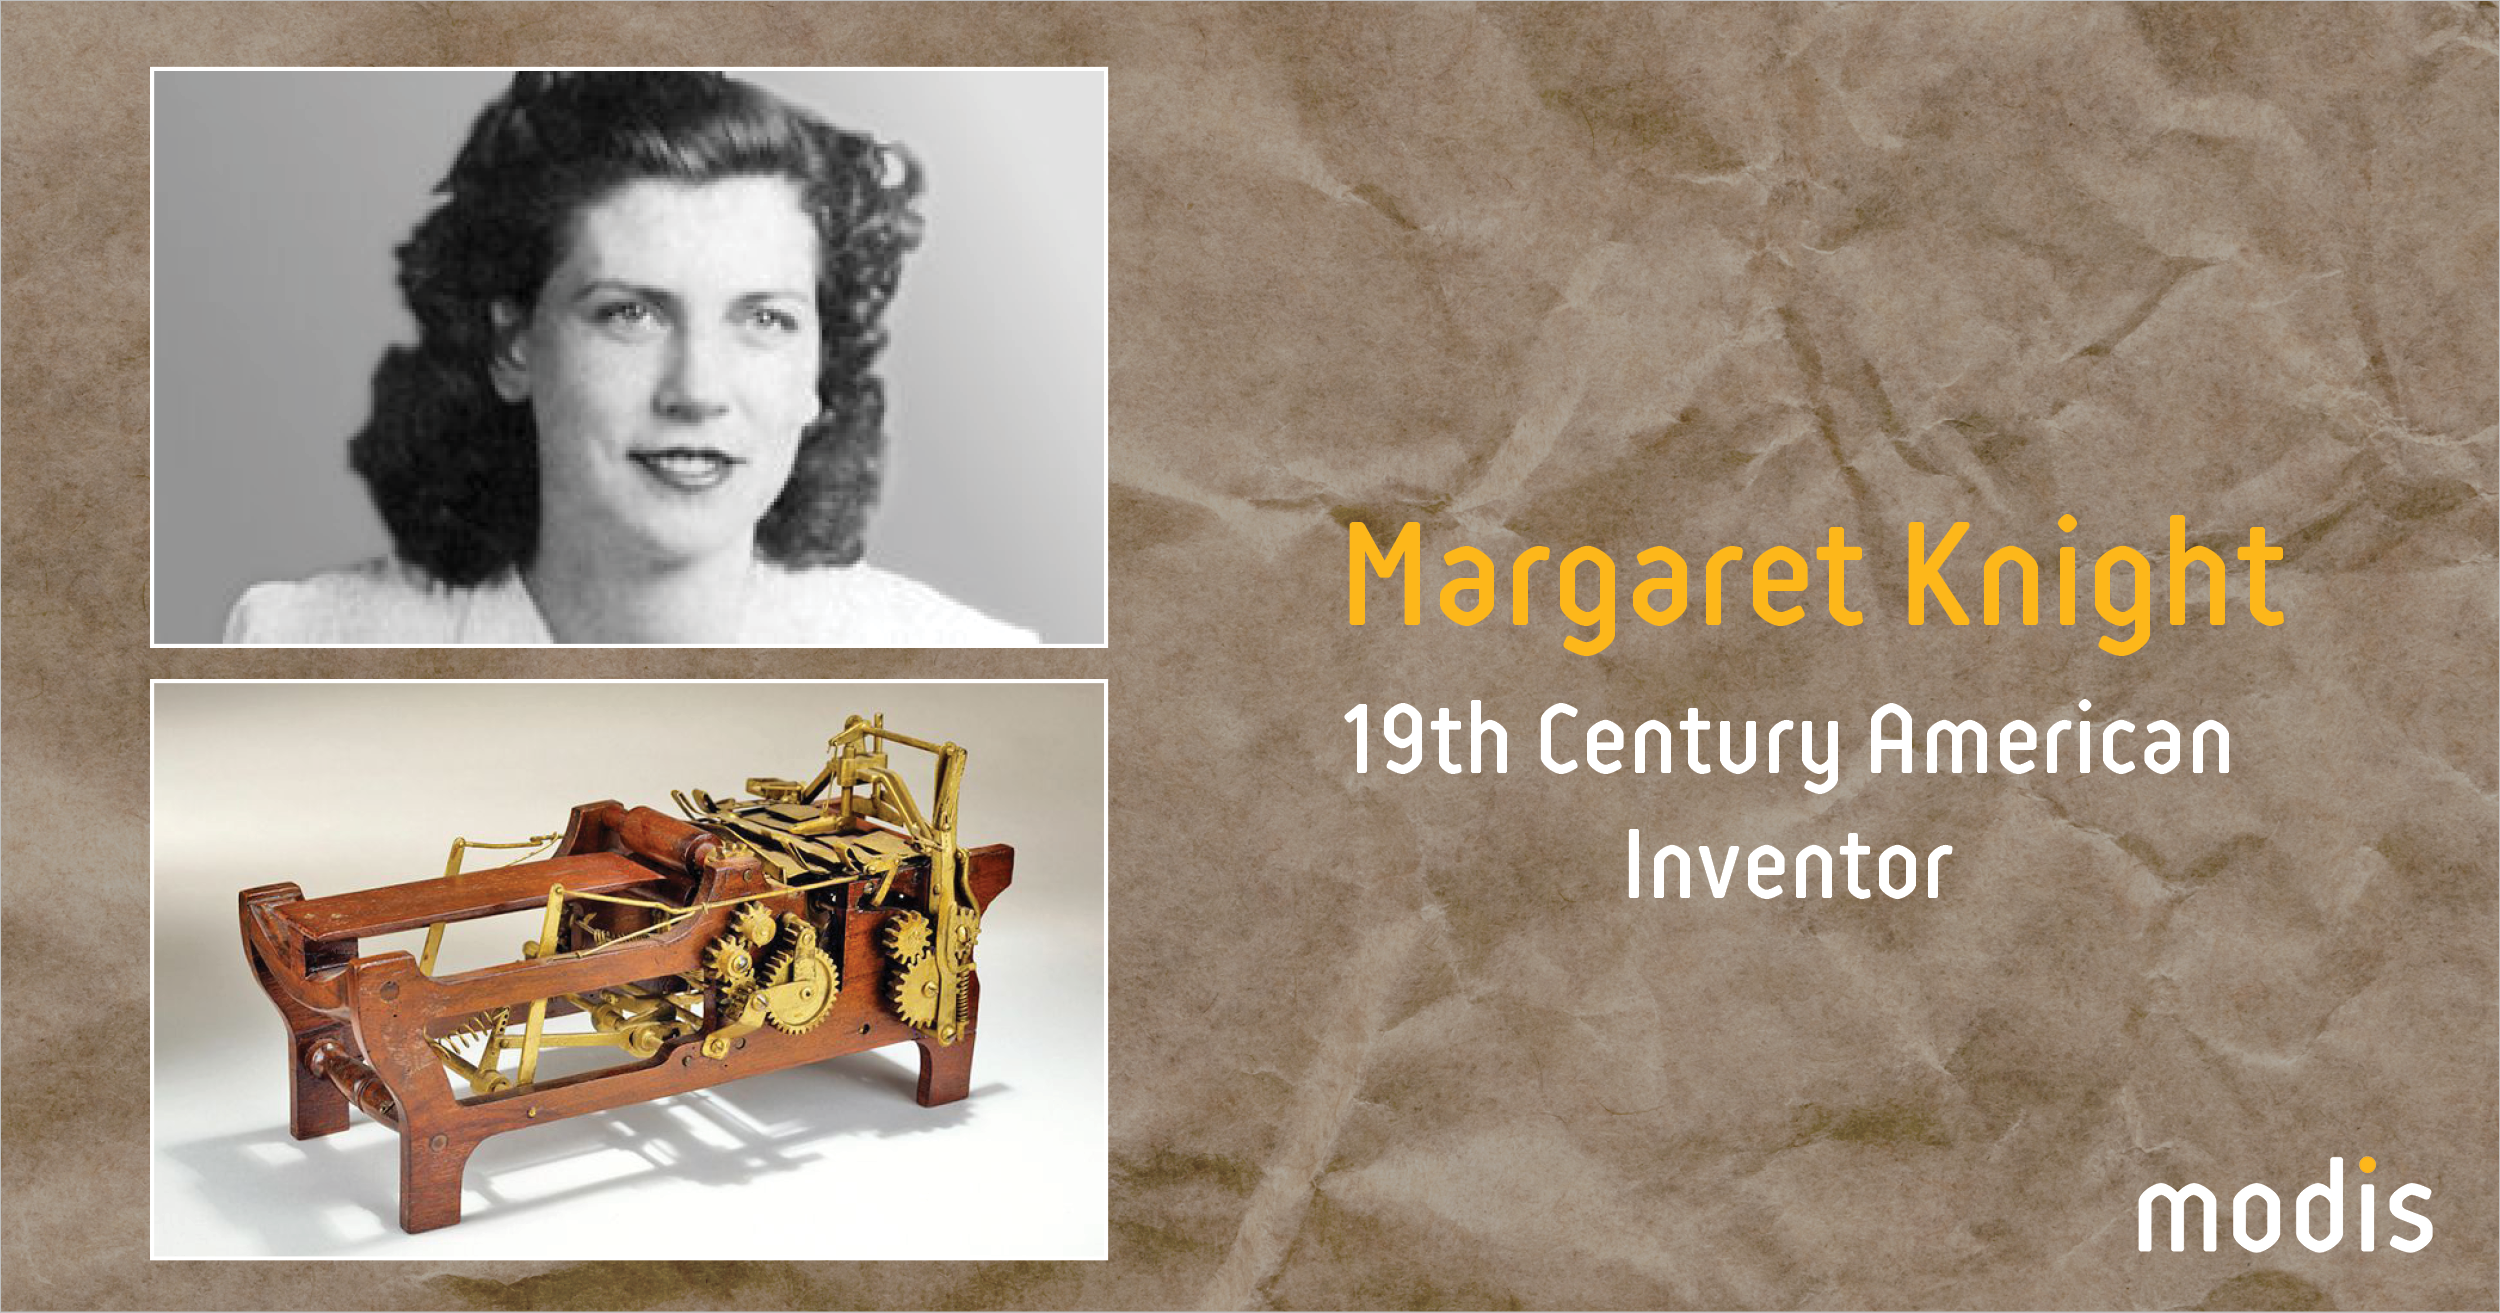 Margaret Knight, 19th century American inventor